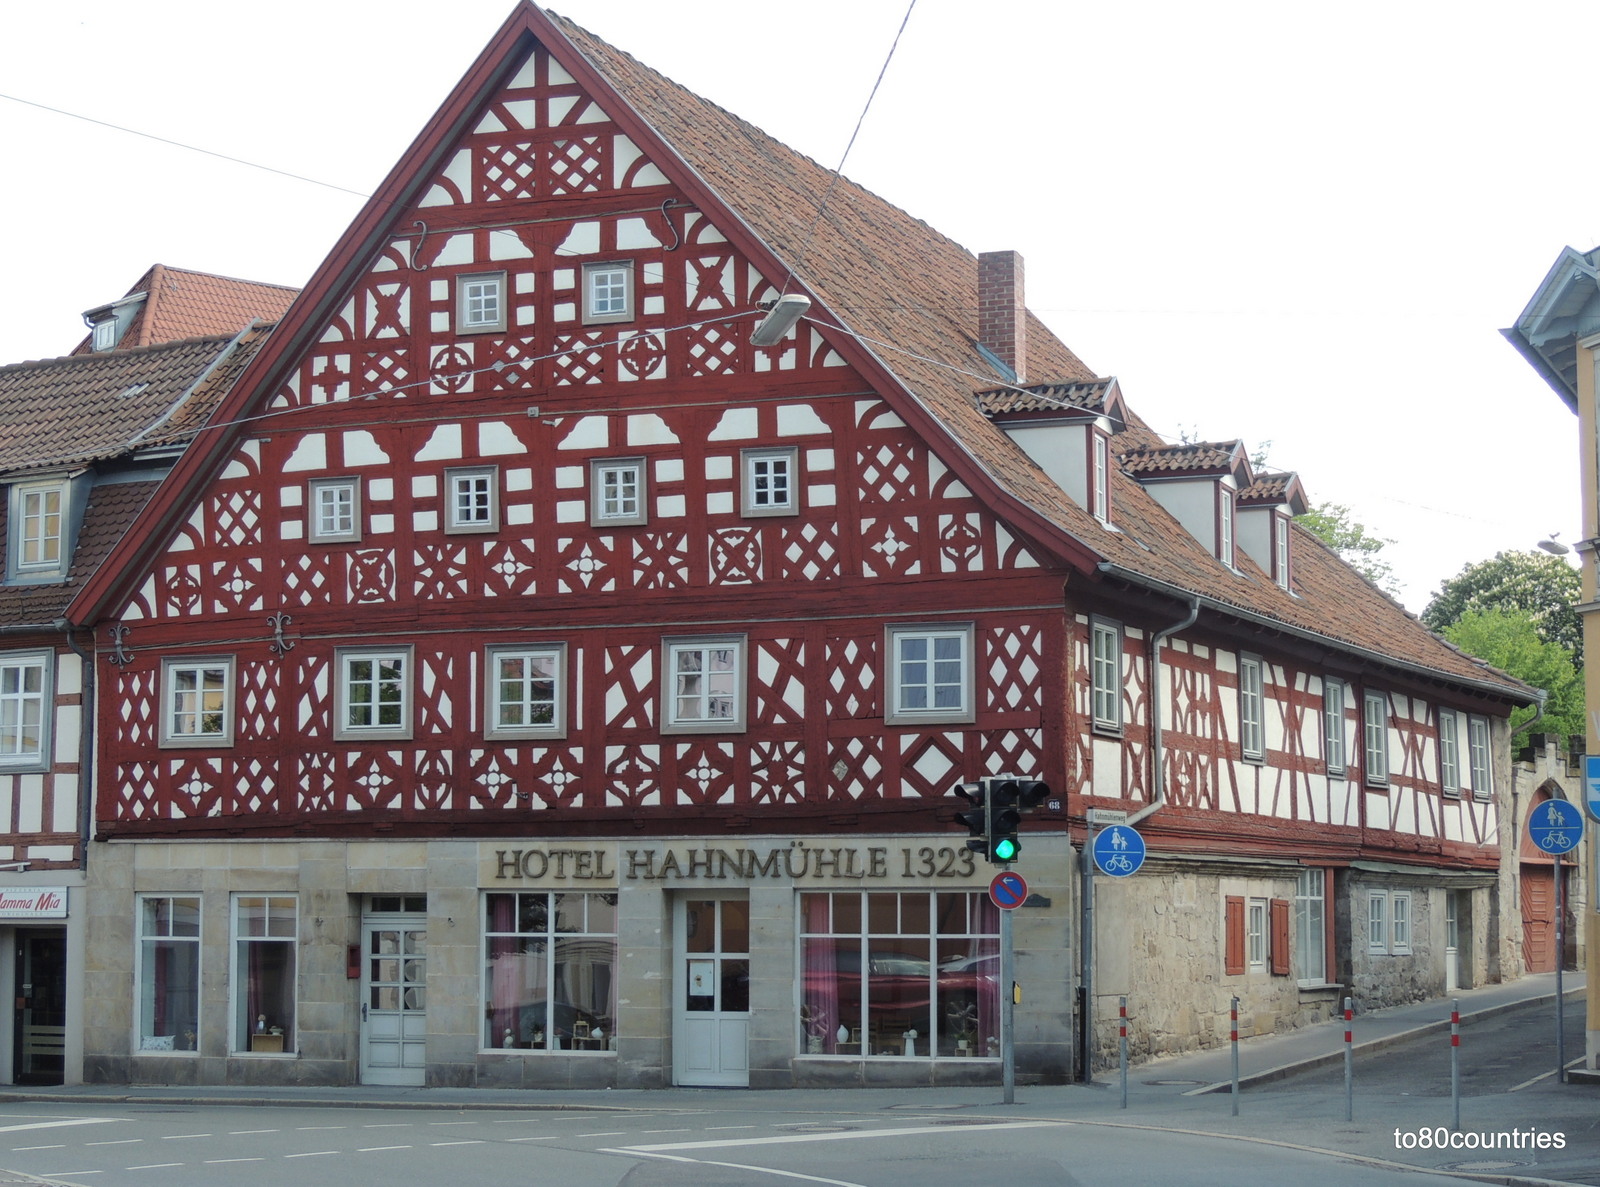 Hotel "Hahnmühle 1323"